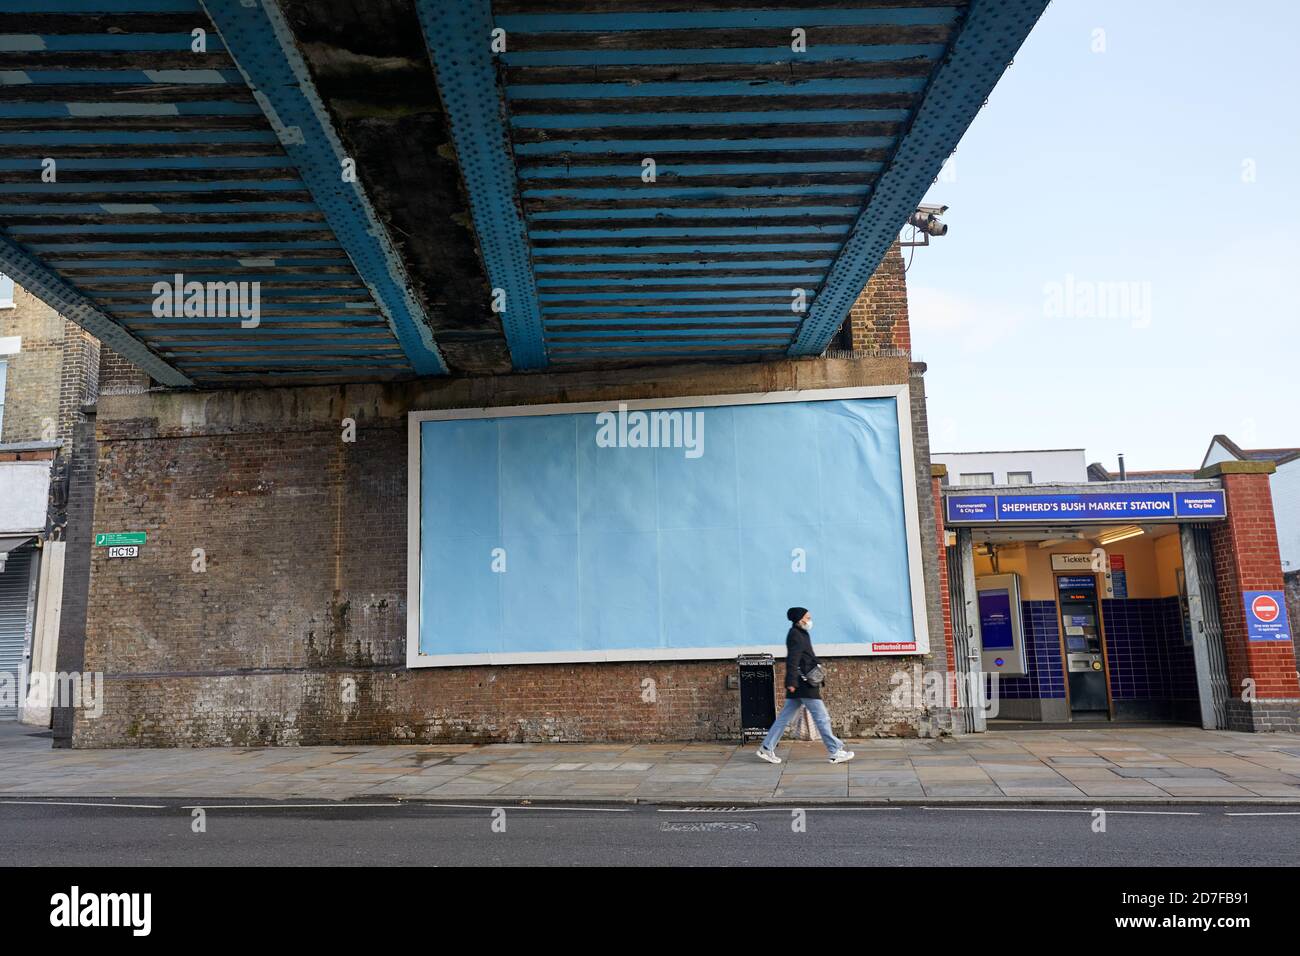 London, UK. - 22 Oct 2020: A blank billboard on a major road in west London. The coronavirus pandemic has seen a downturn in advertising revenue leading to empty hoardings. Stock Photo